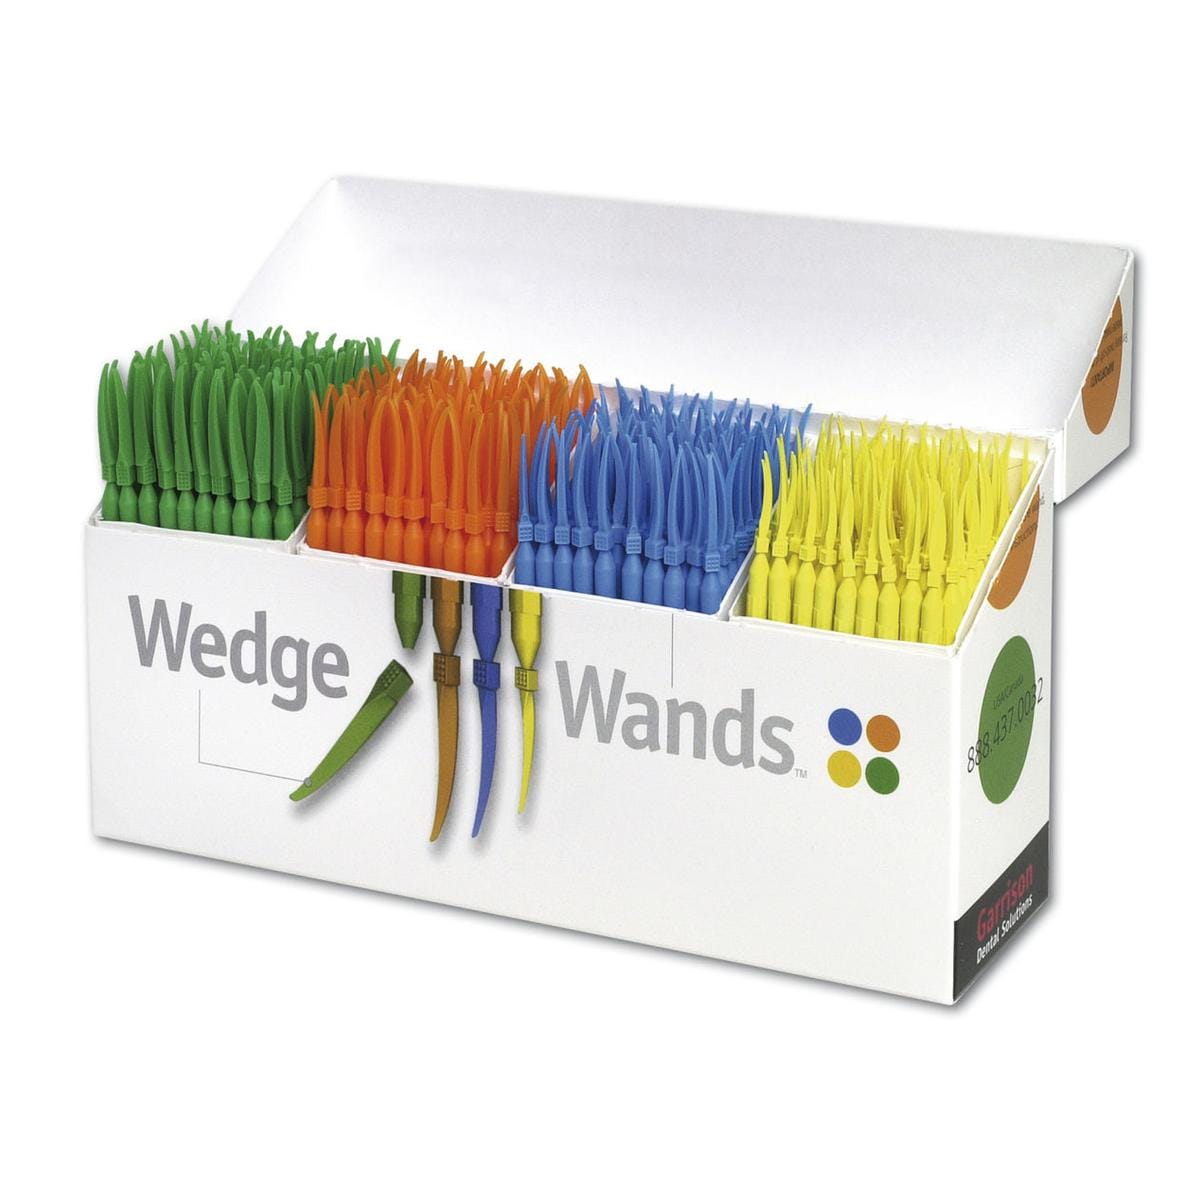 Wedge Wands - Complete set - Complete set #WK4